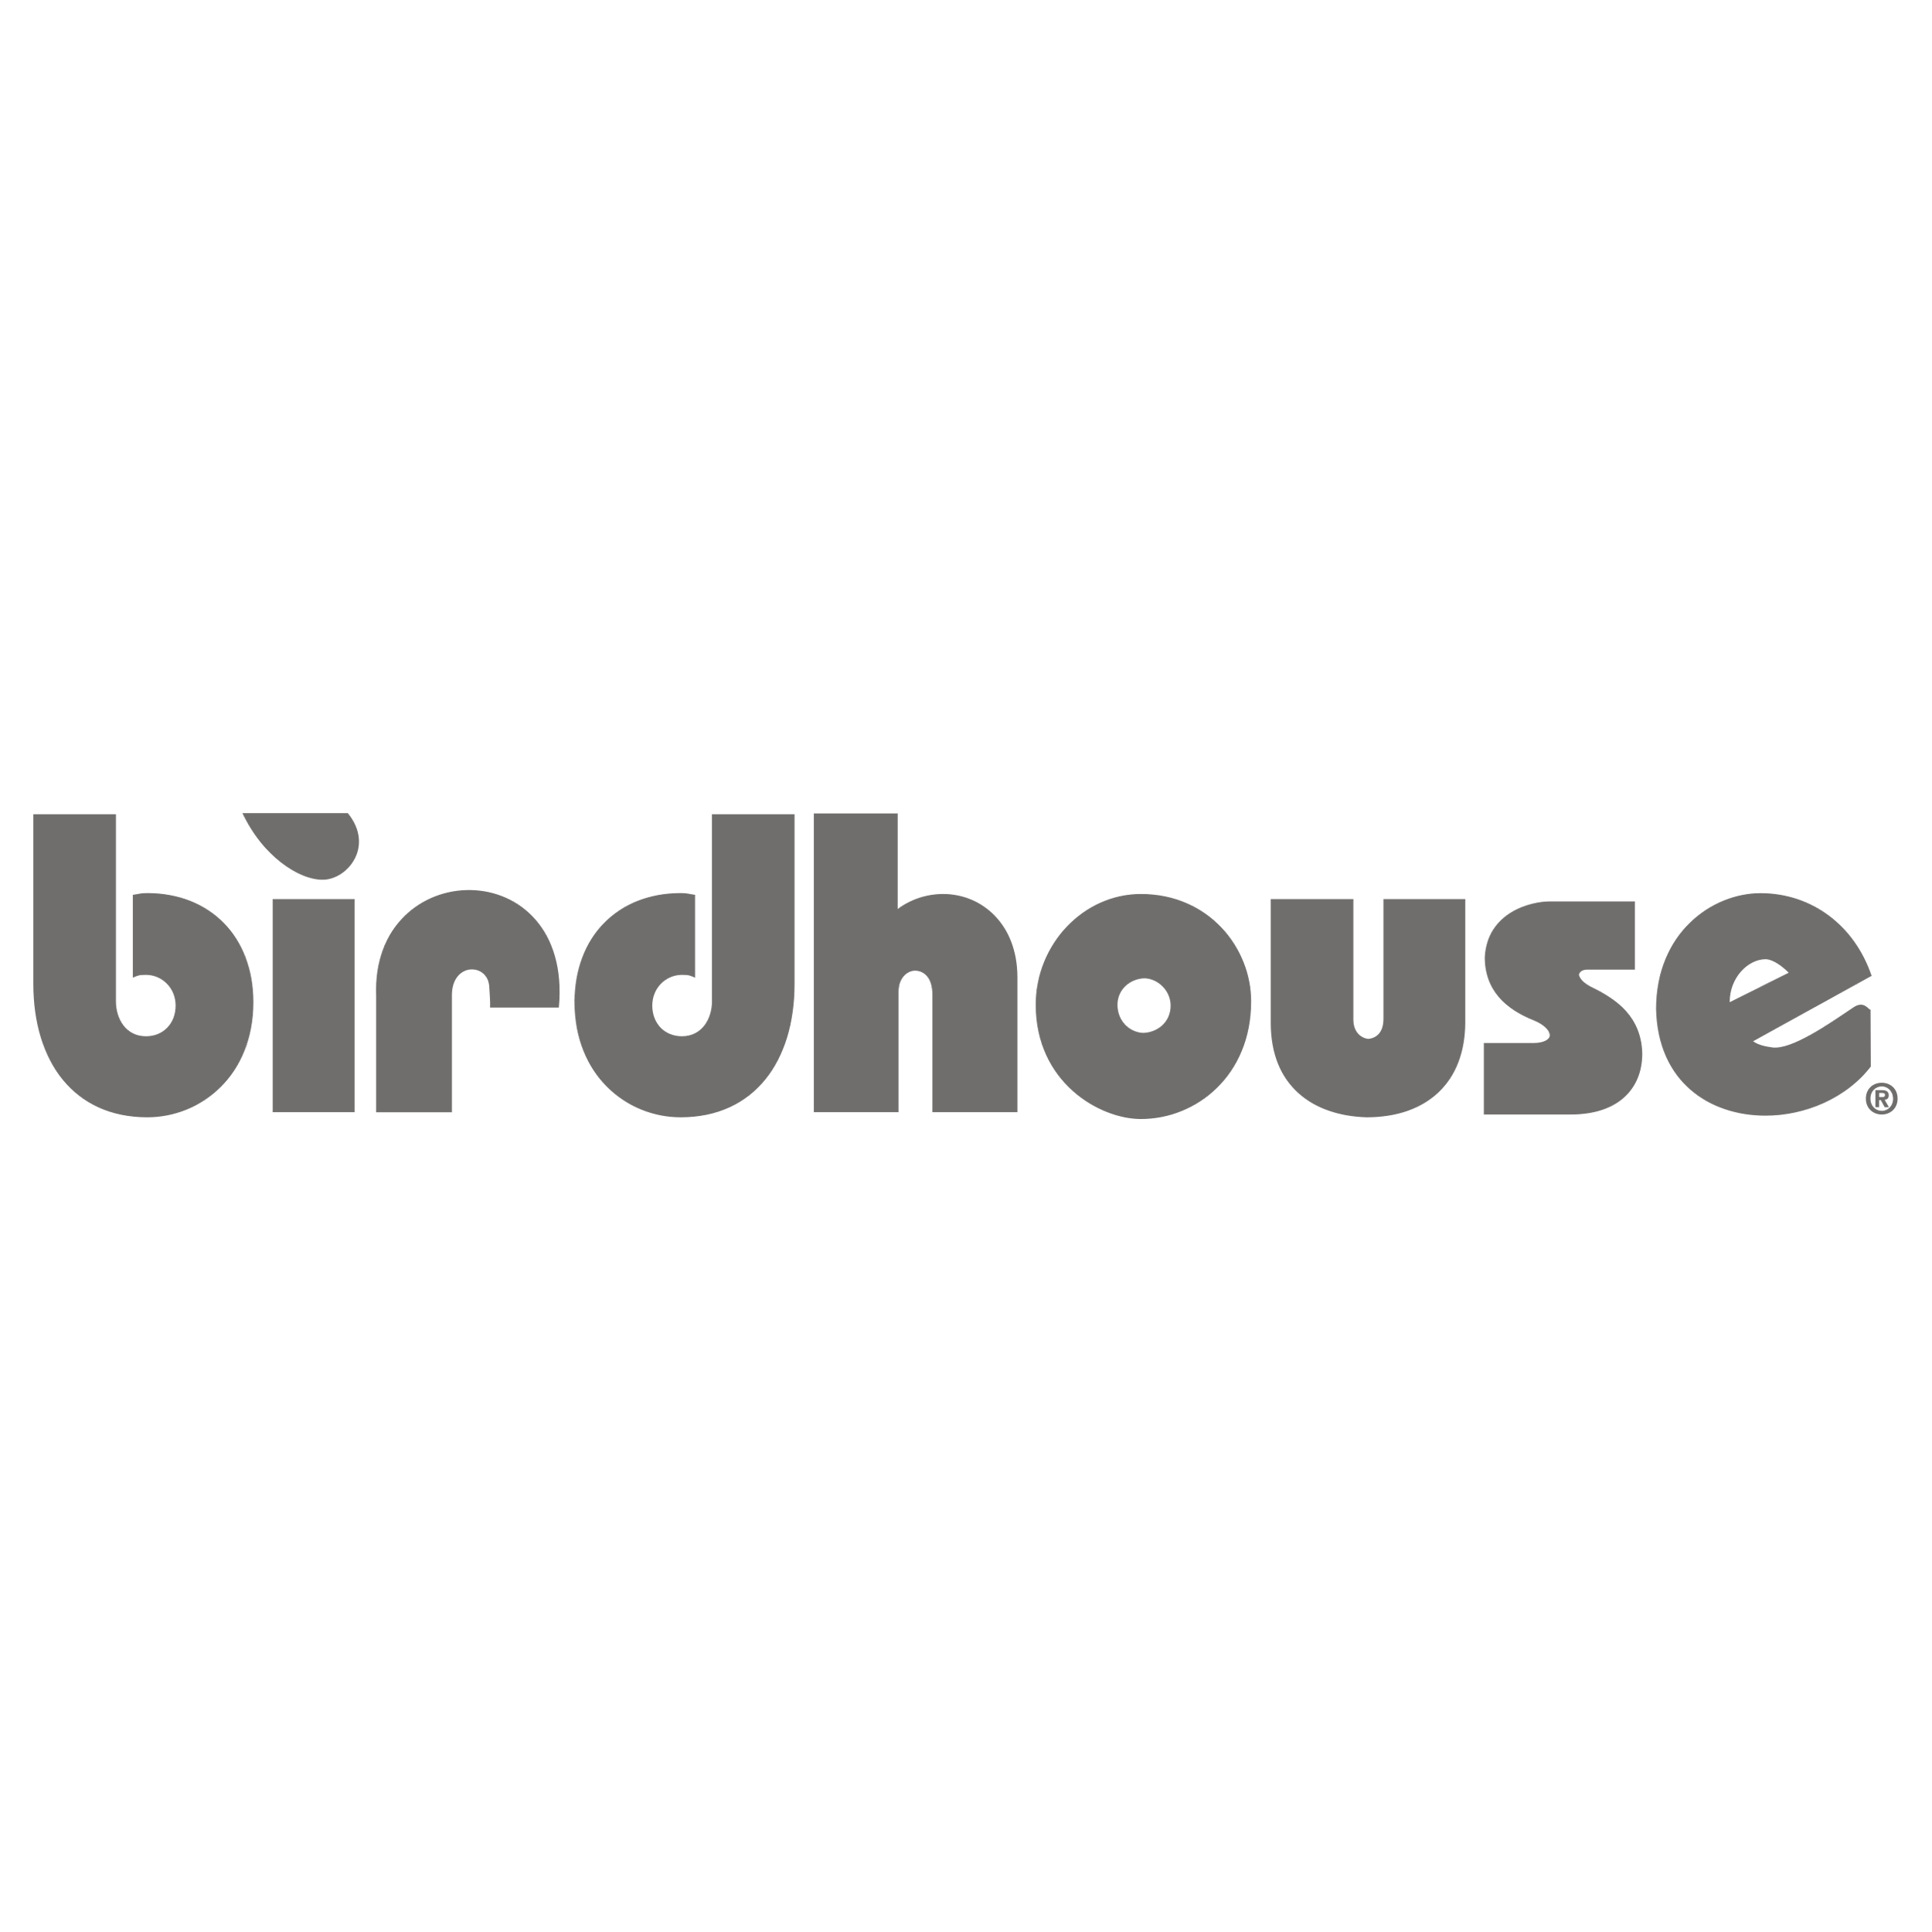 Birdhouse Skateboards Logo  Transparent Image